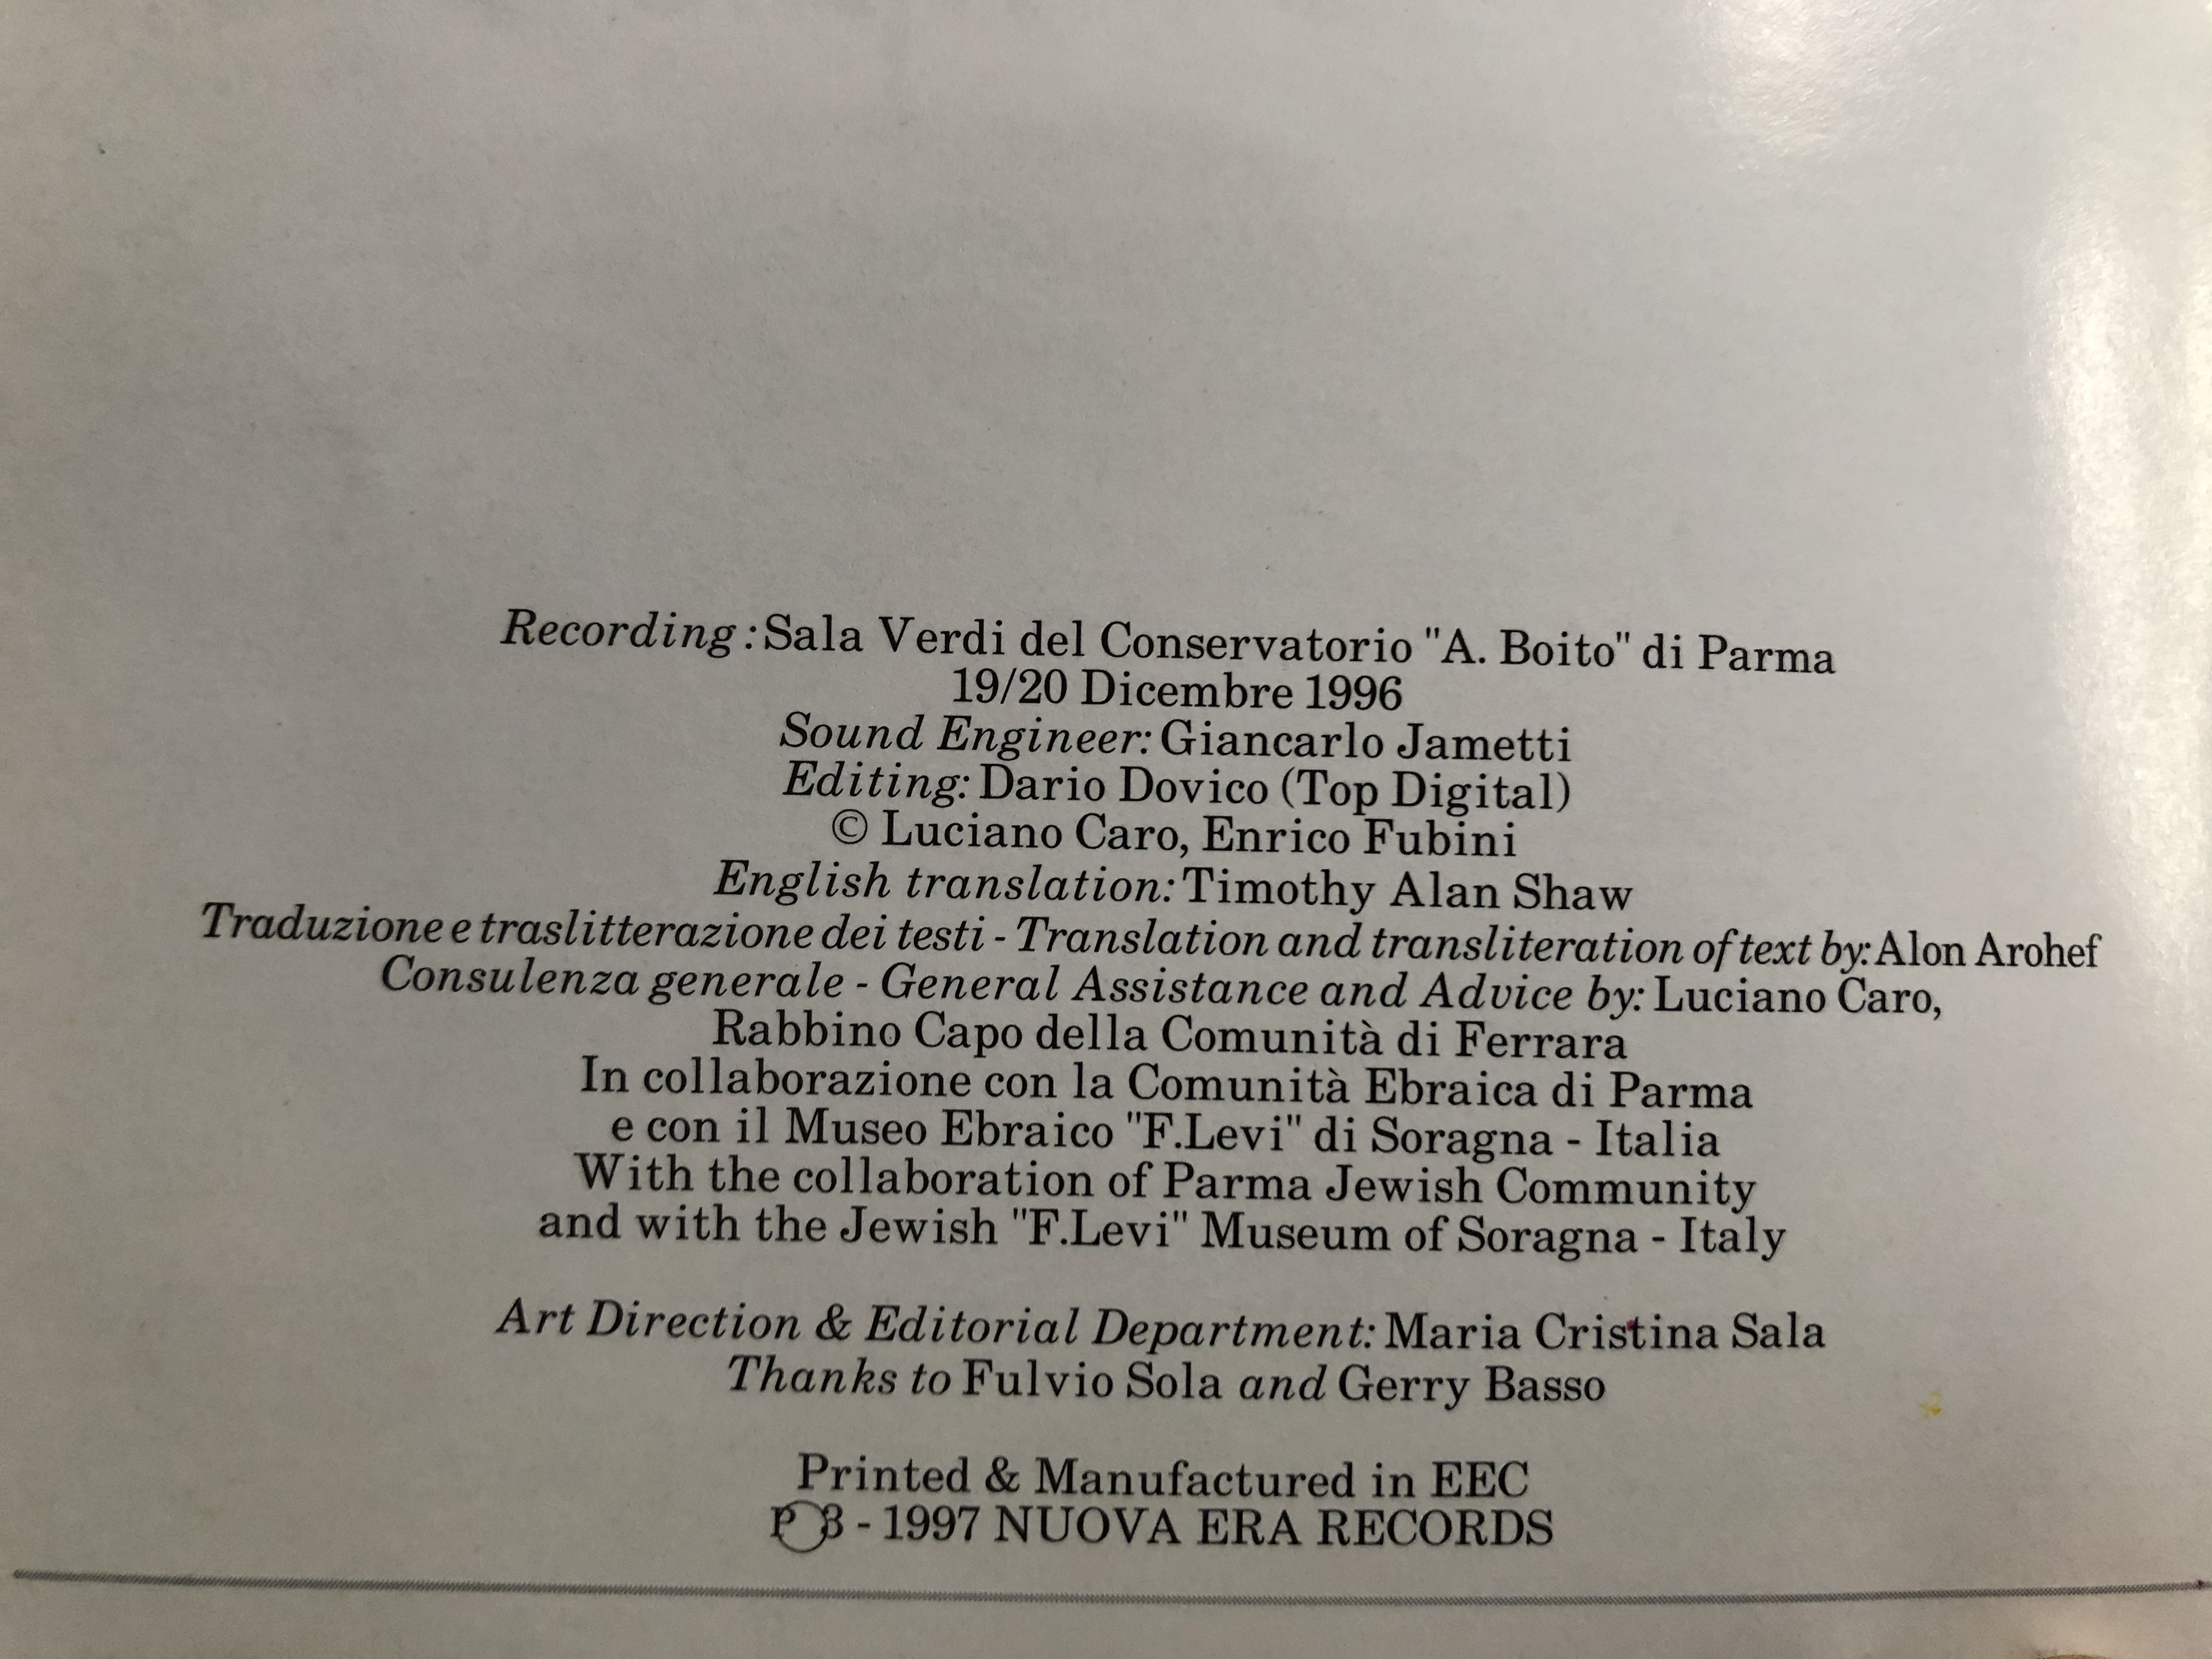 ebraica-riccardo-moretti-nuova-era-audio-cd-1997-7287-2-.jpg